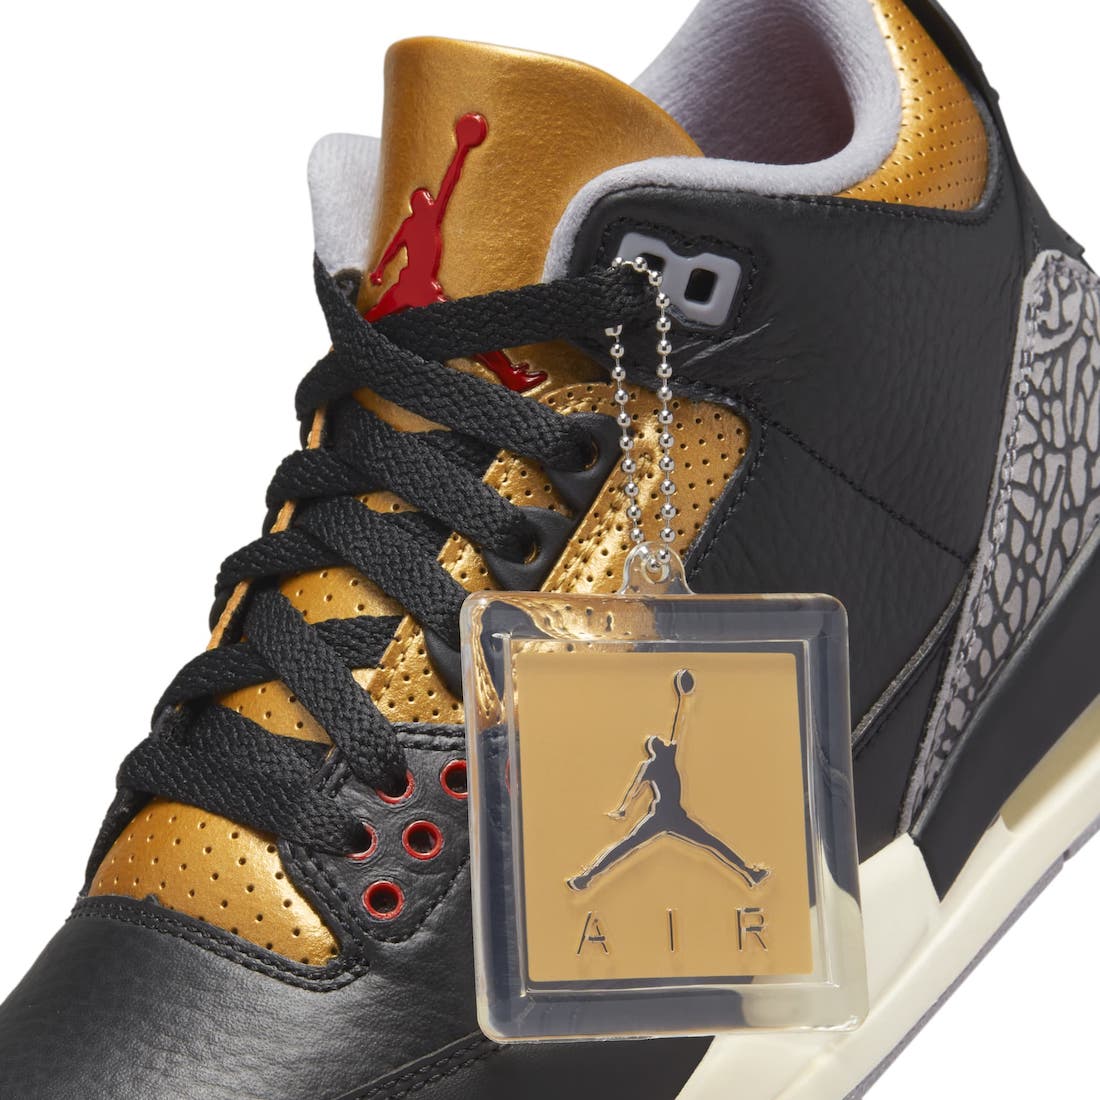 Official Look At The Air Jordan 3 Retro “Black/Gold”